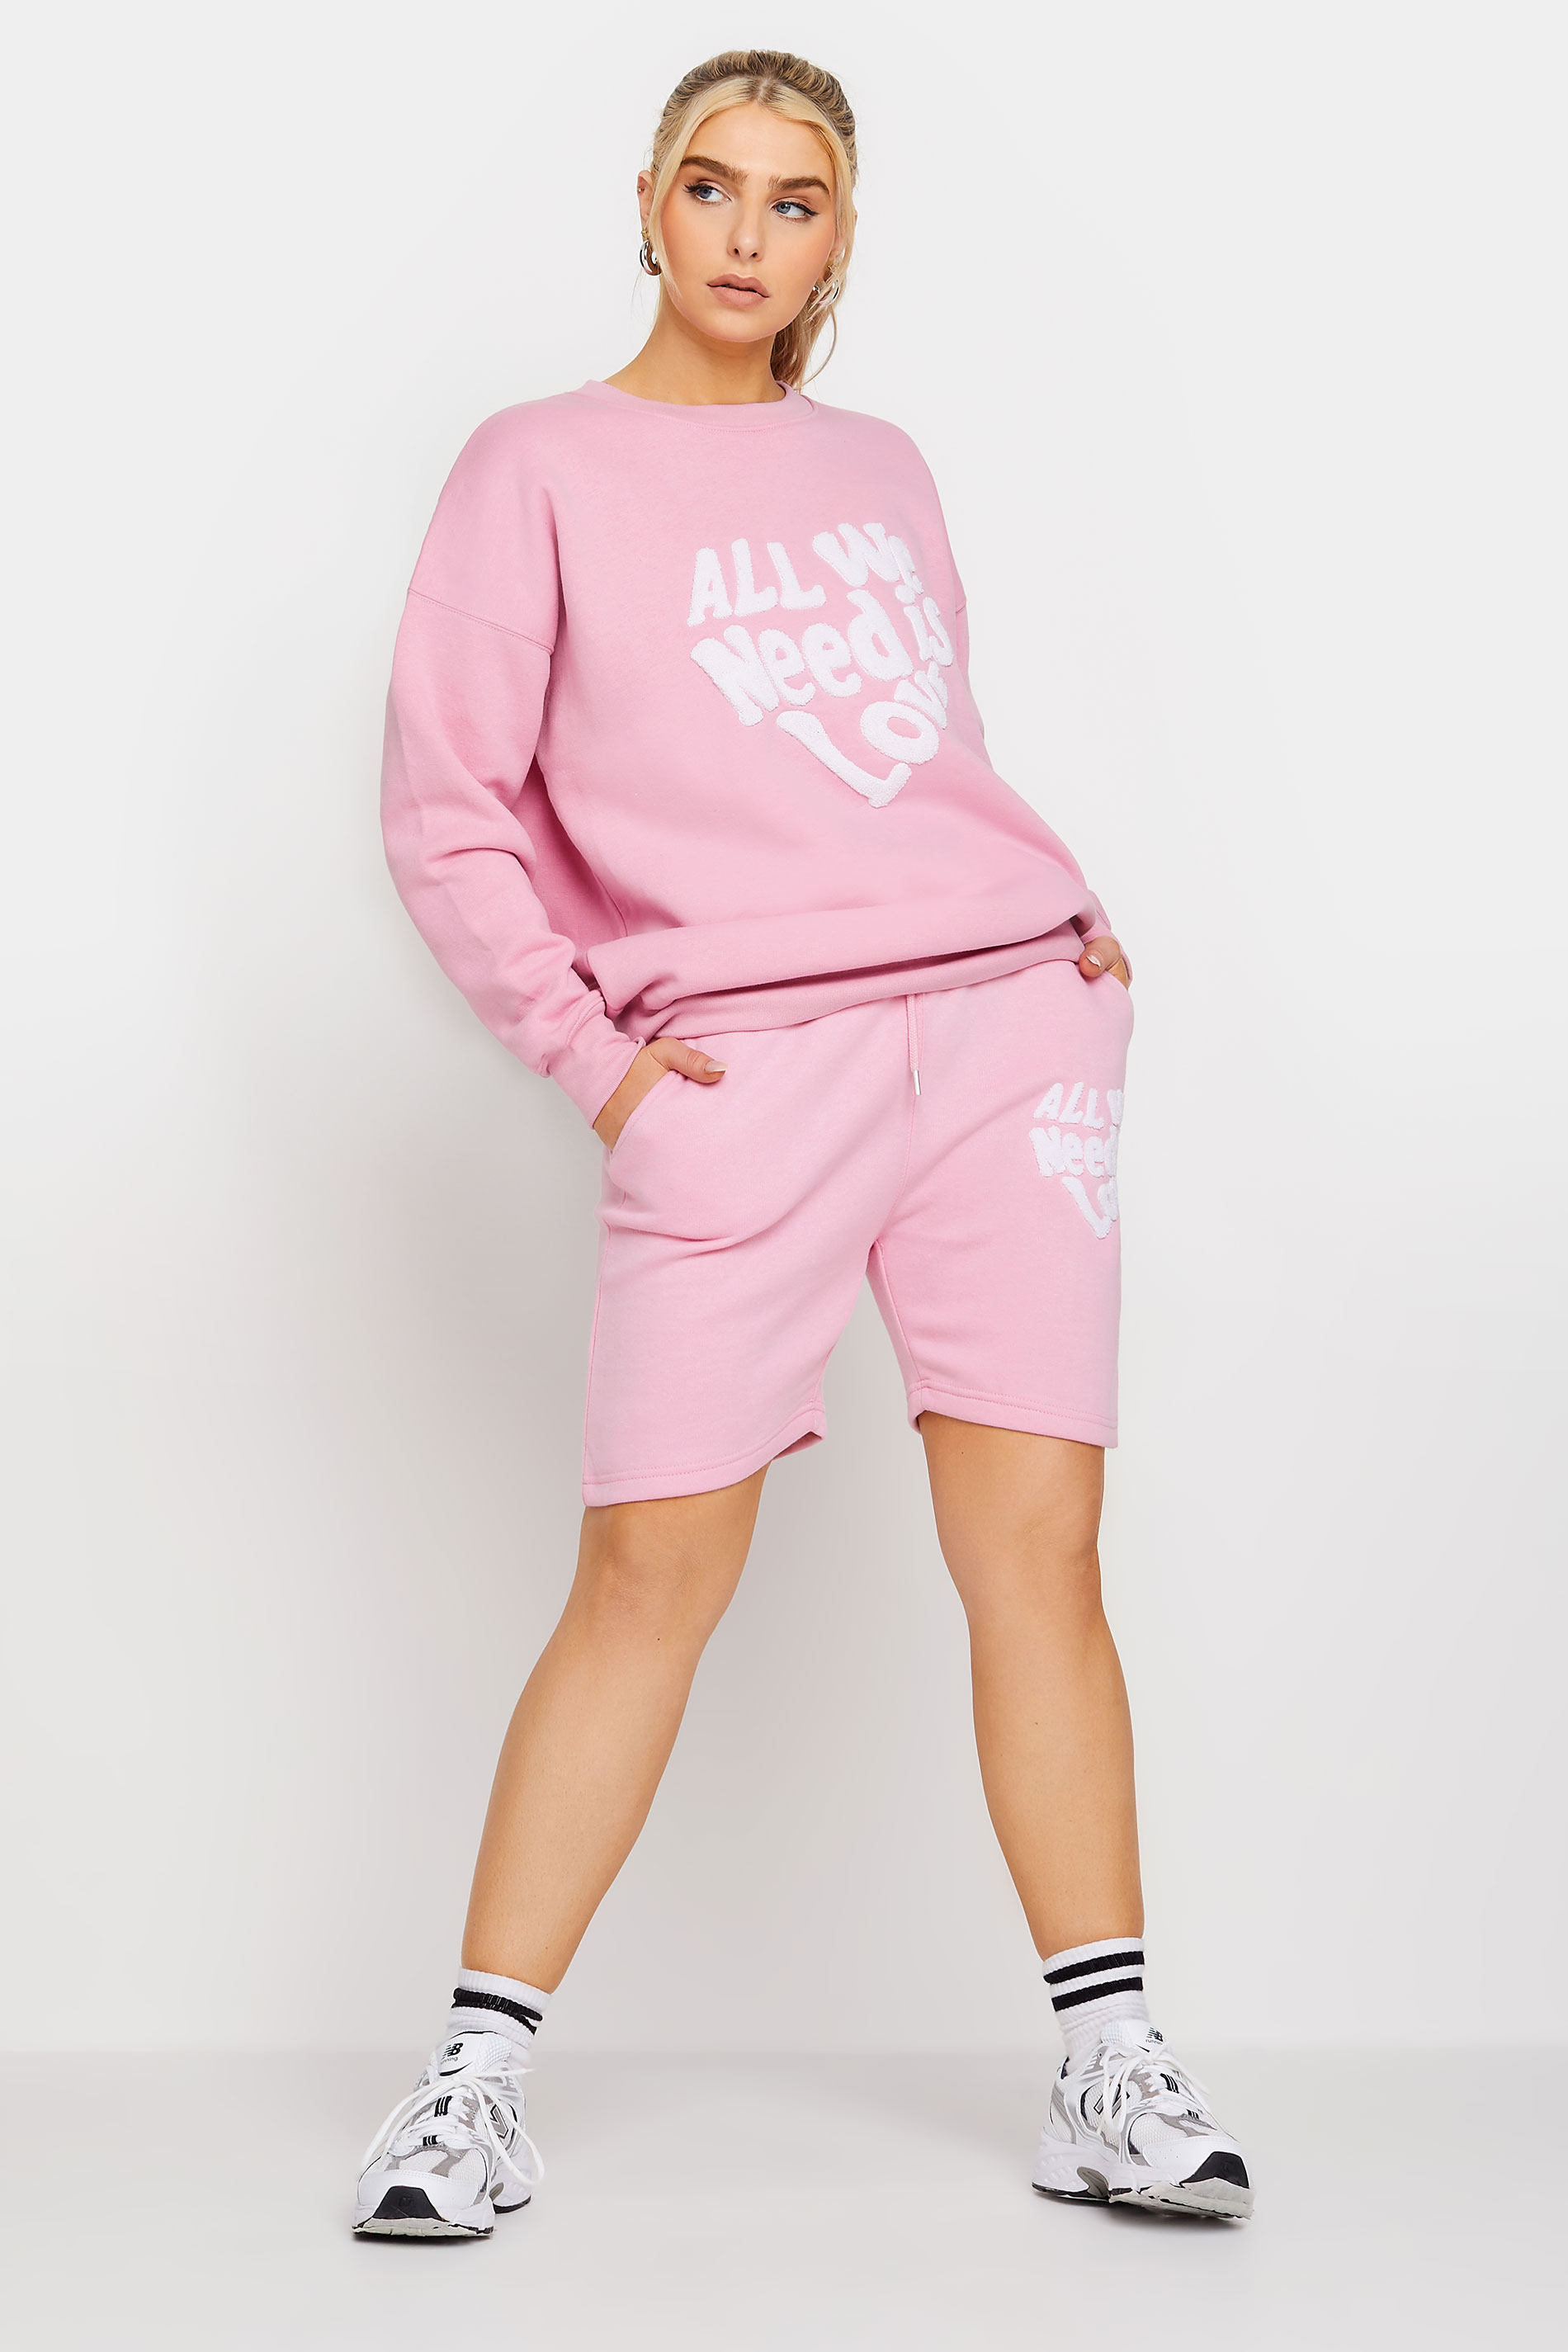 Pink 'All We Need Is Love' Slogan Oversized Sweatshirt | PixieGirl 2